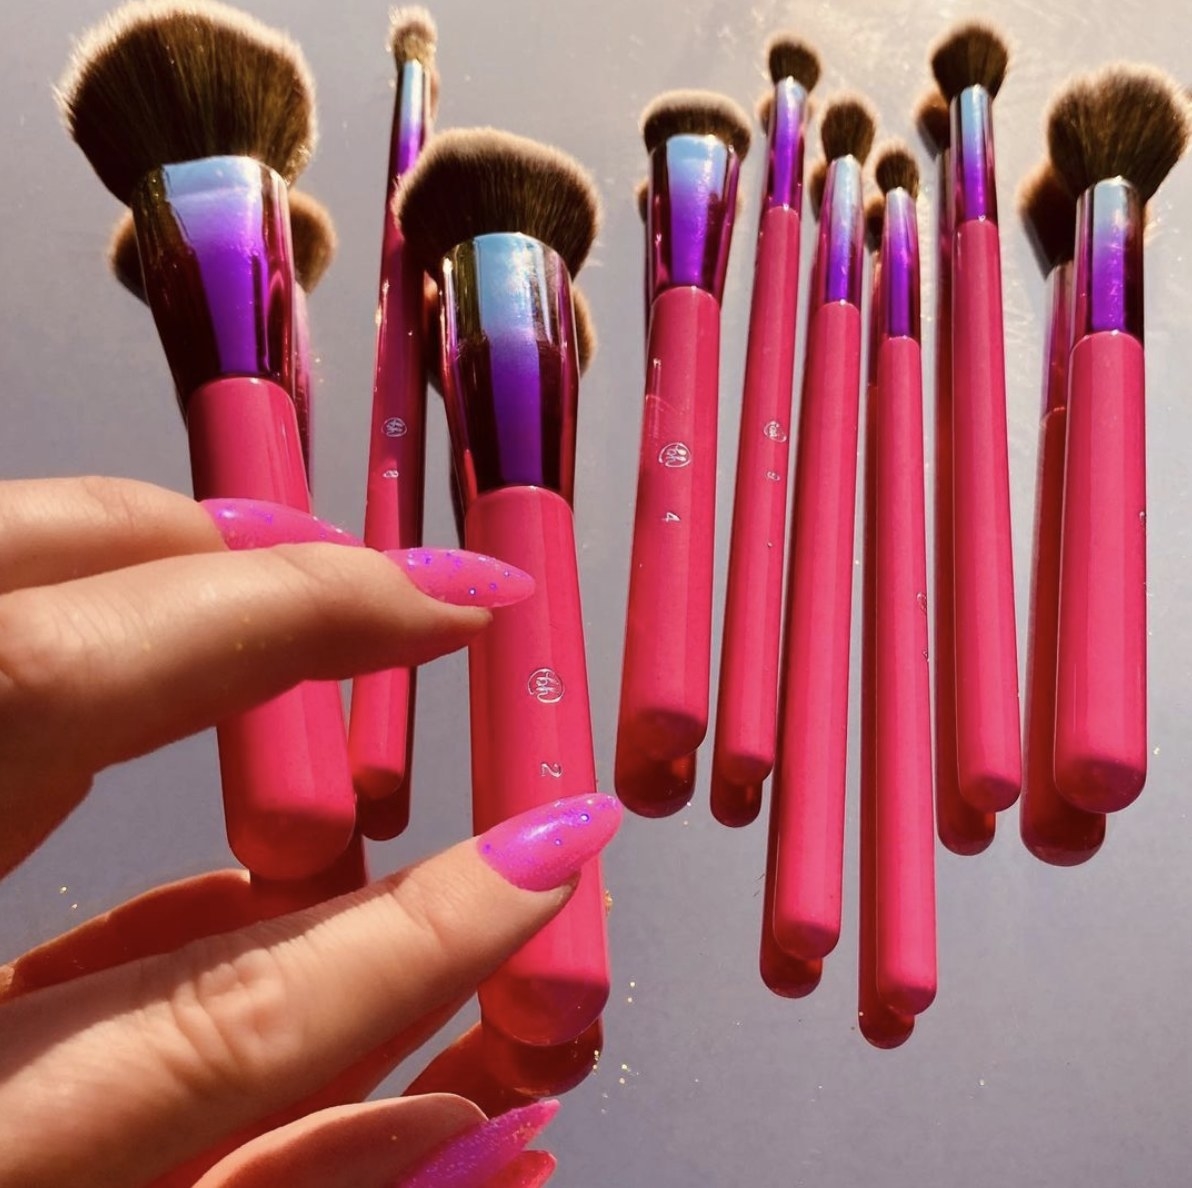 A set of pink handled makeup brushes